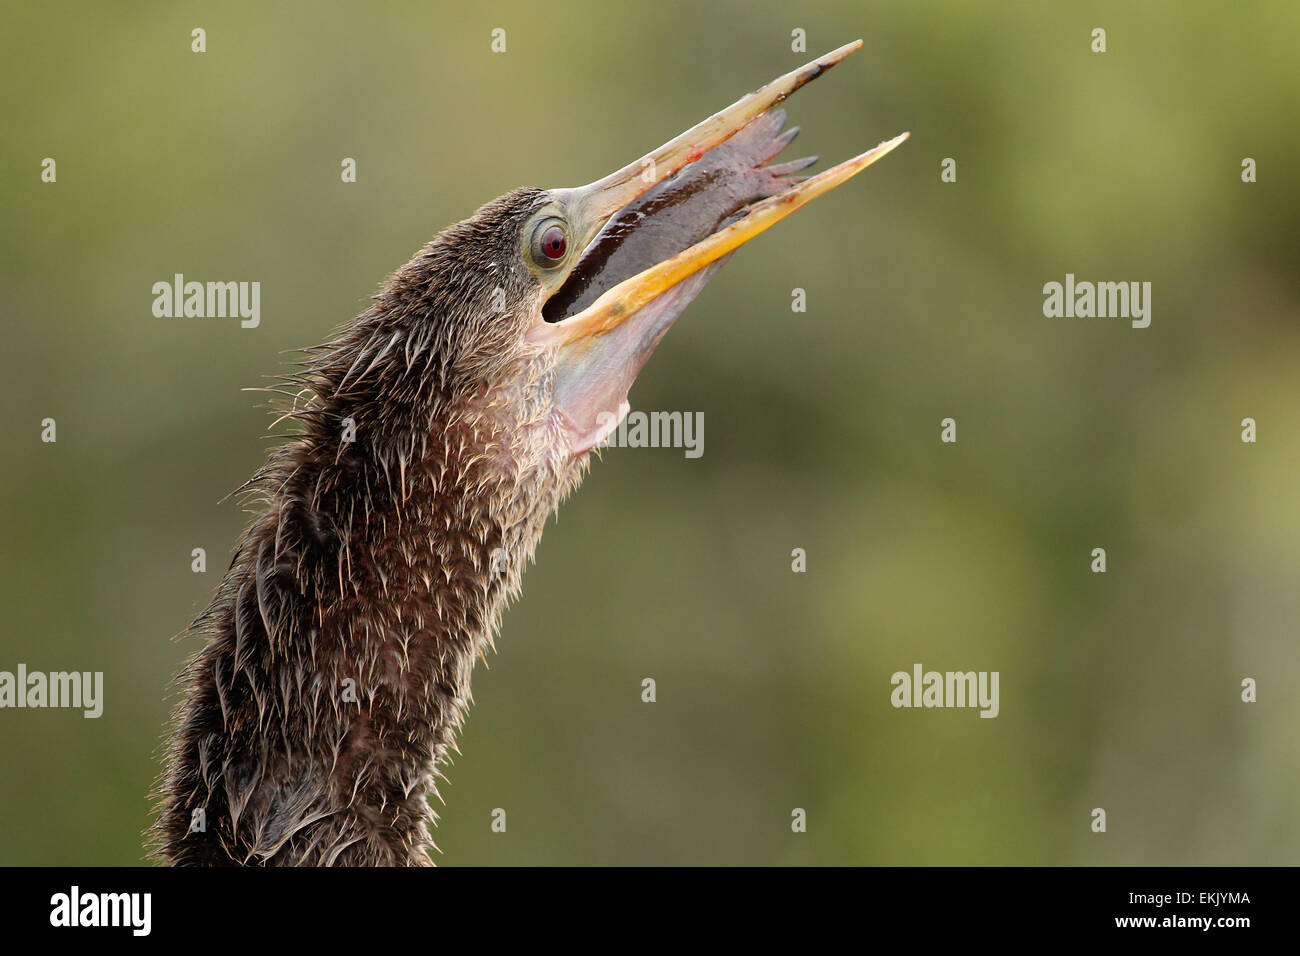 Anhinga (Anhinga anhinga) swallowing fish Stock Photo - Alamy